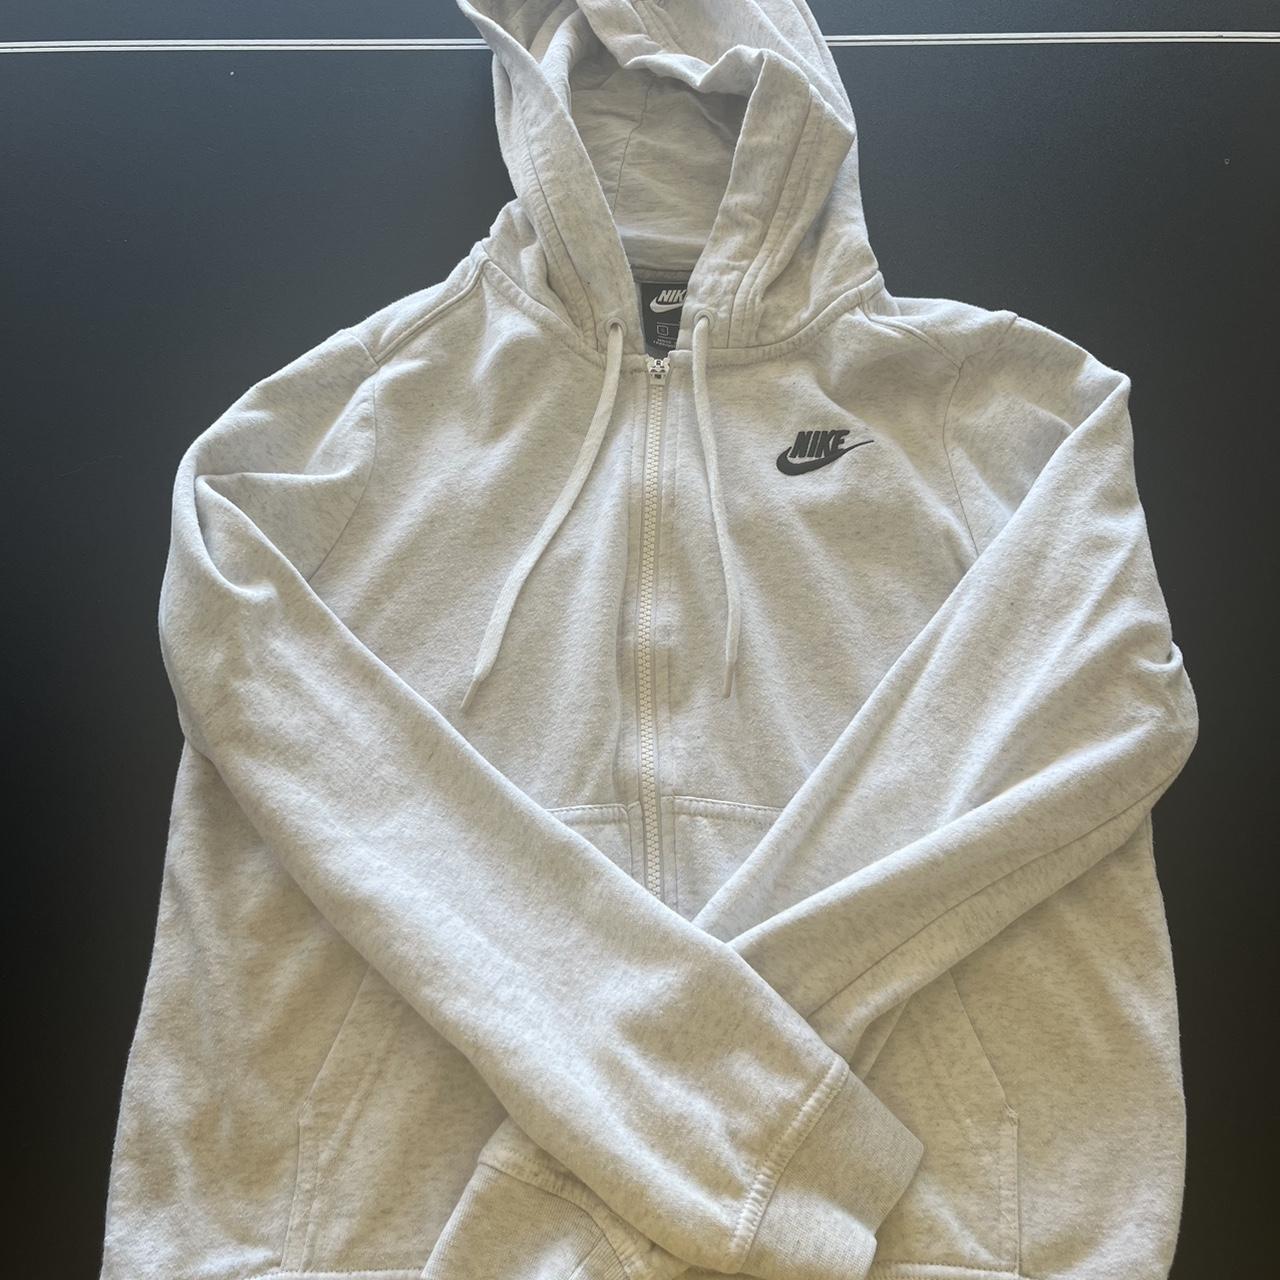 Nike Women's White Jacket